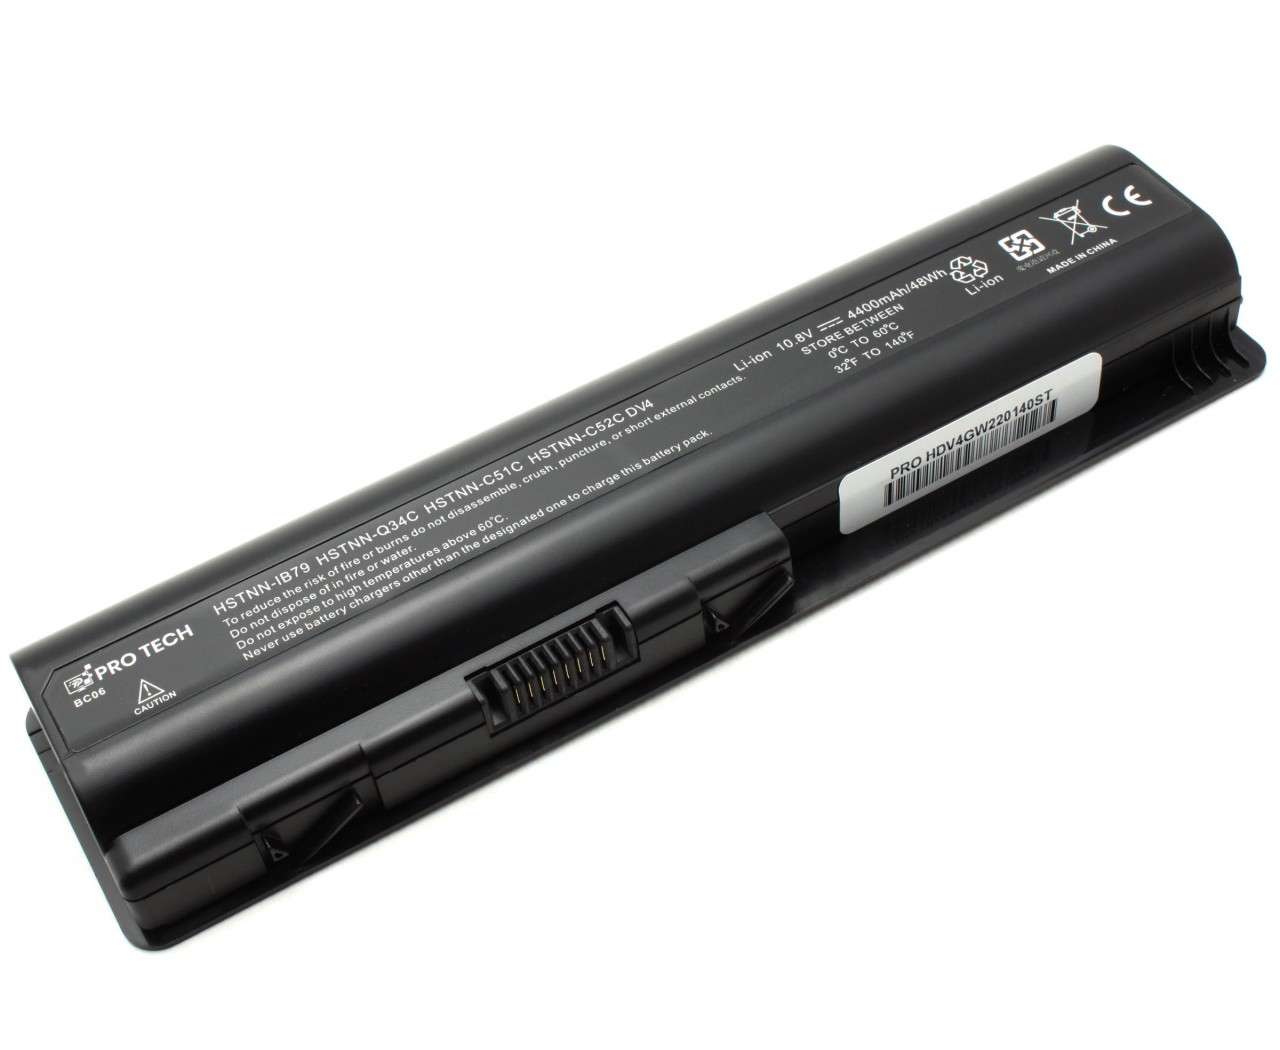 Baterie HP G61 400